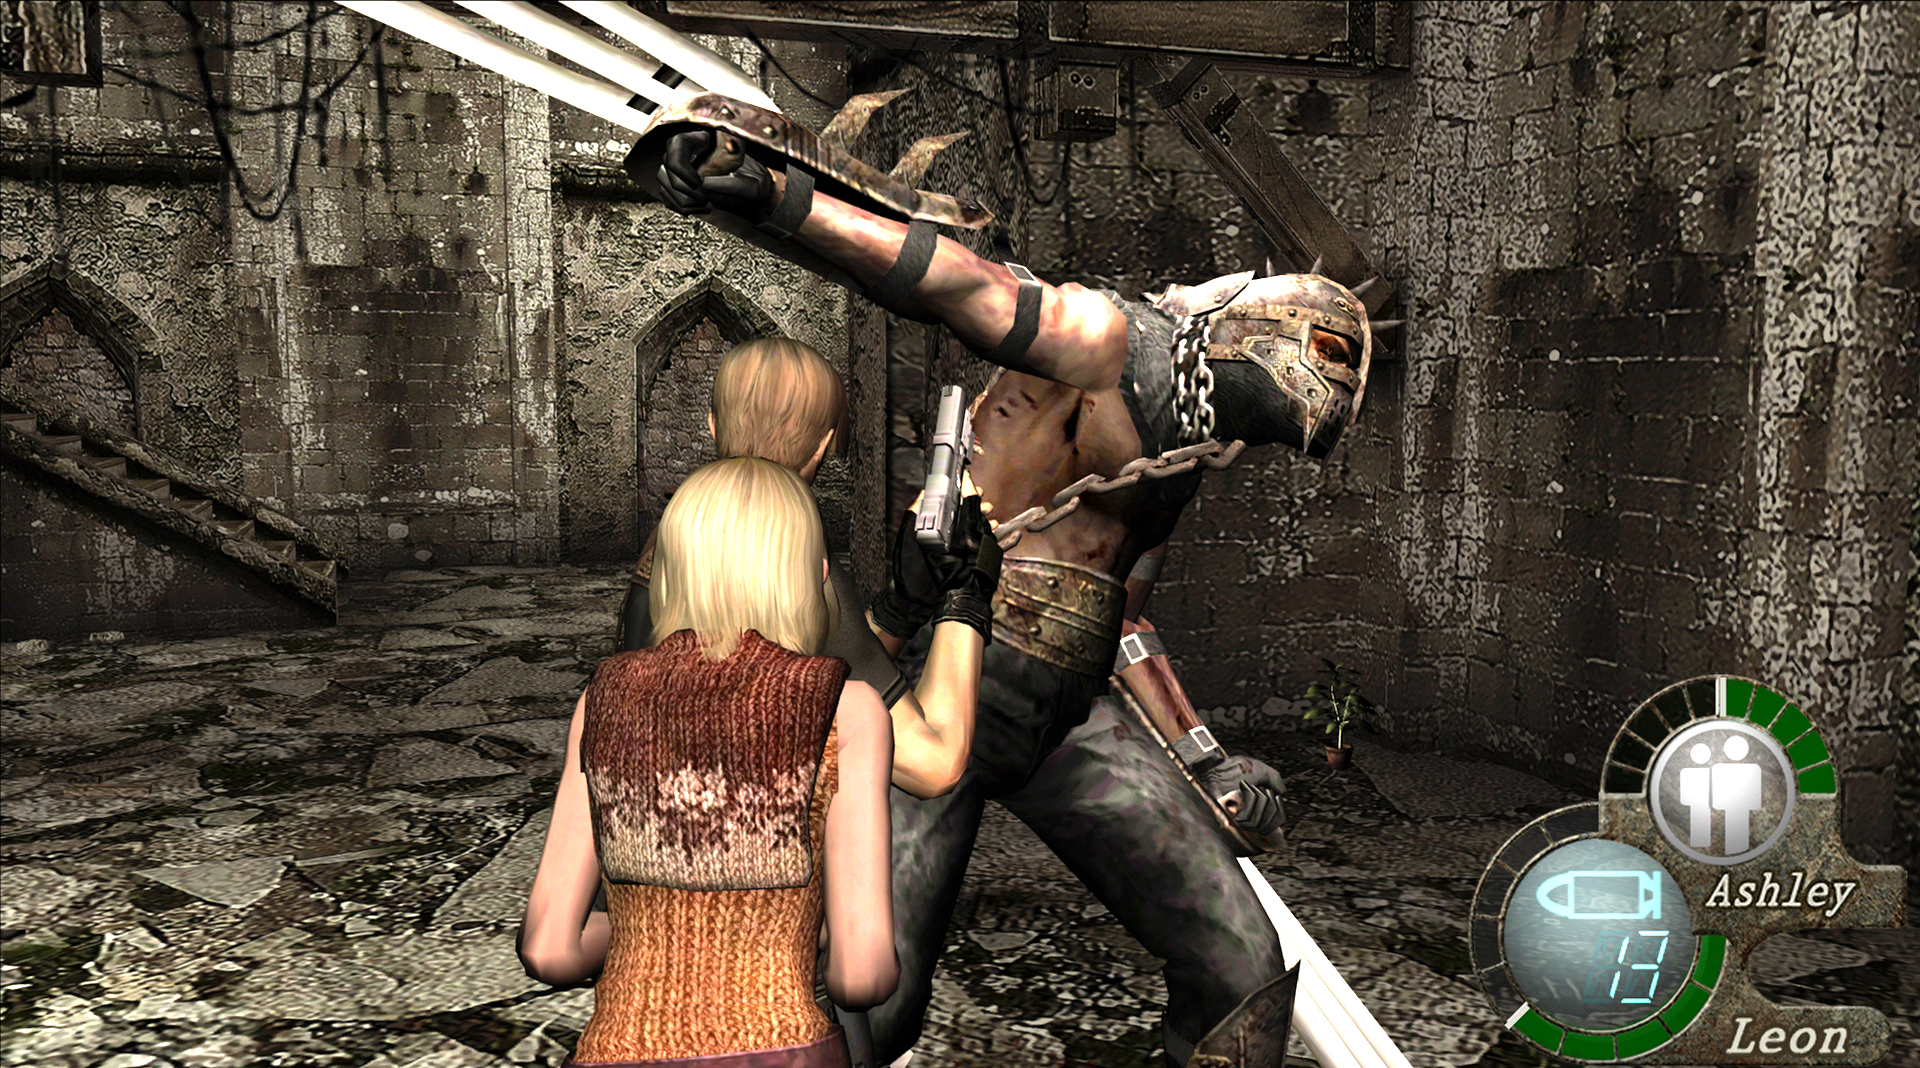 Save 75% on Resident Evil 4 on Steam